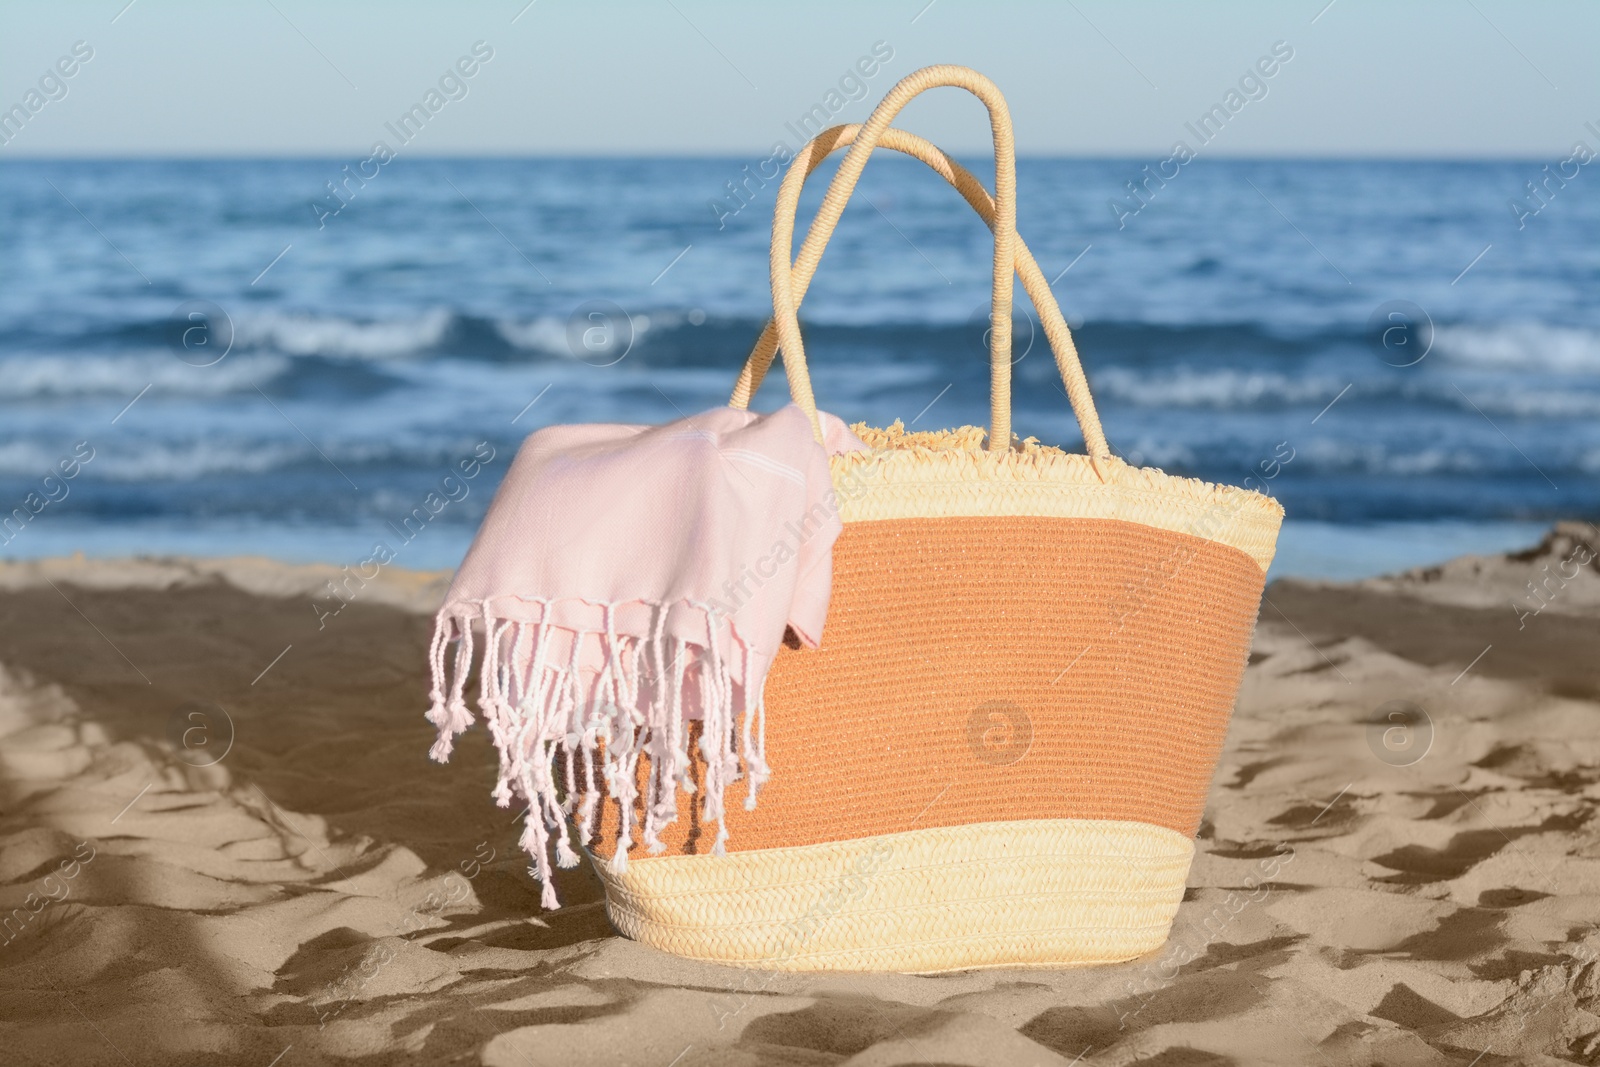 Photo of Stylish wicker bag on sandy beach near sea